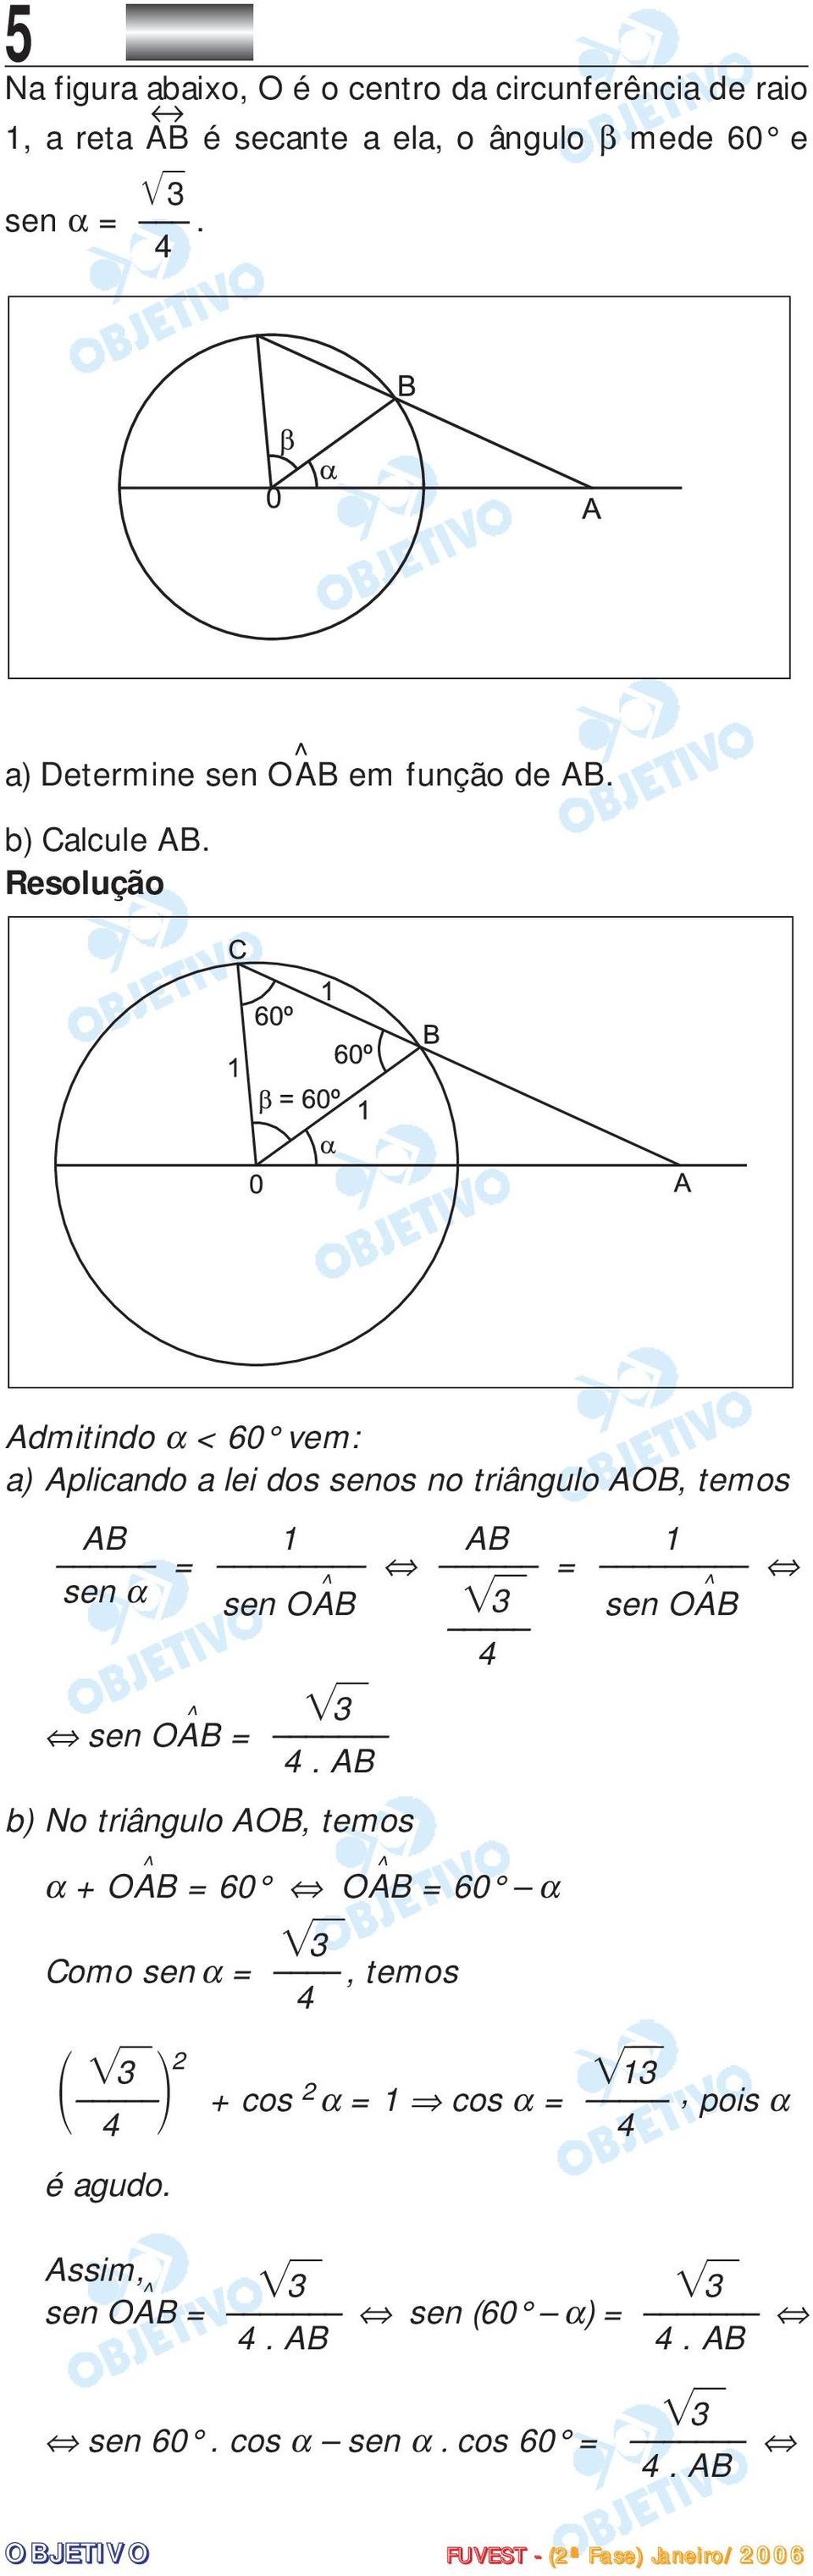 Admitindo α < 60 vem: a) Aplicando a lei dos senos no triângulo AOB, temos AB 1 AB 1 = = sen α sen O ^AB sen O ^AB 4 sen O ^AB = 4.